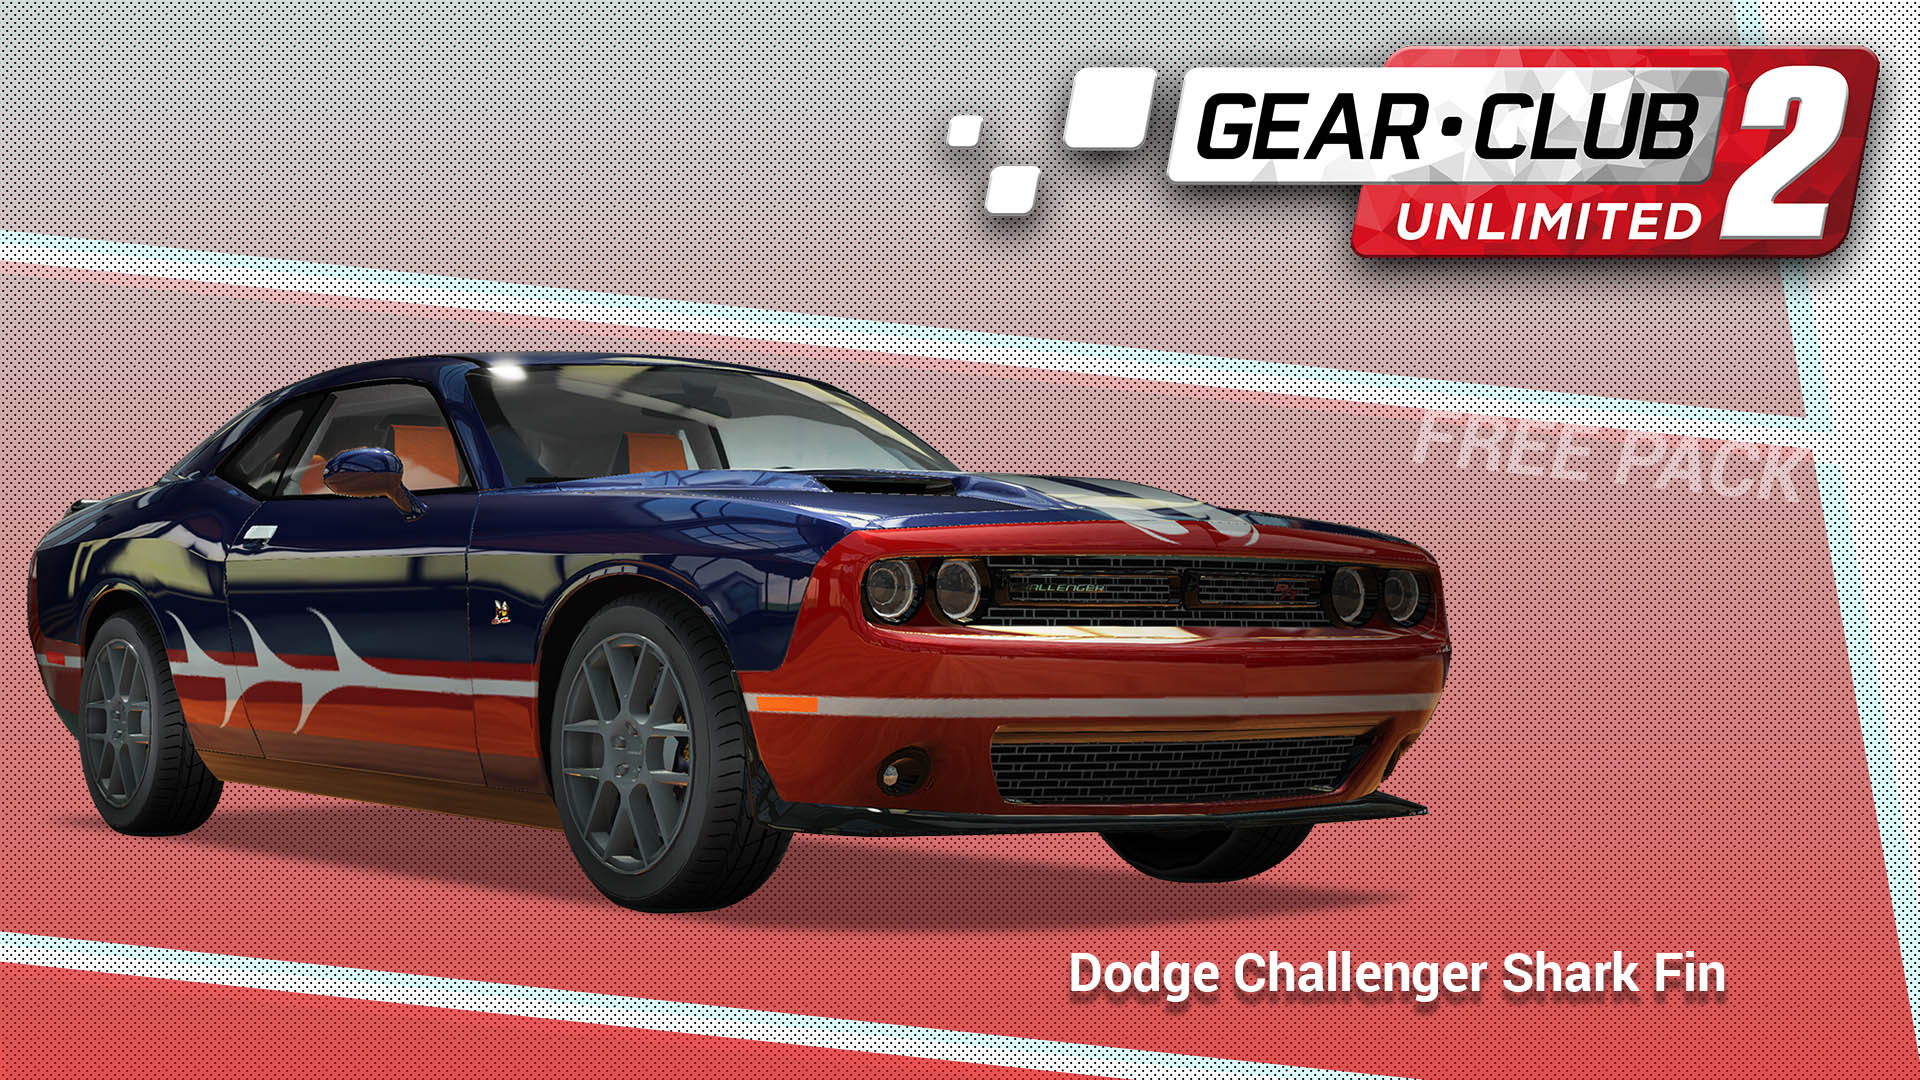 Dodge Challenger Shark Fin - Gear.Club Unlimited 2